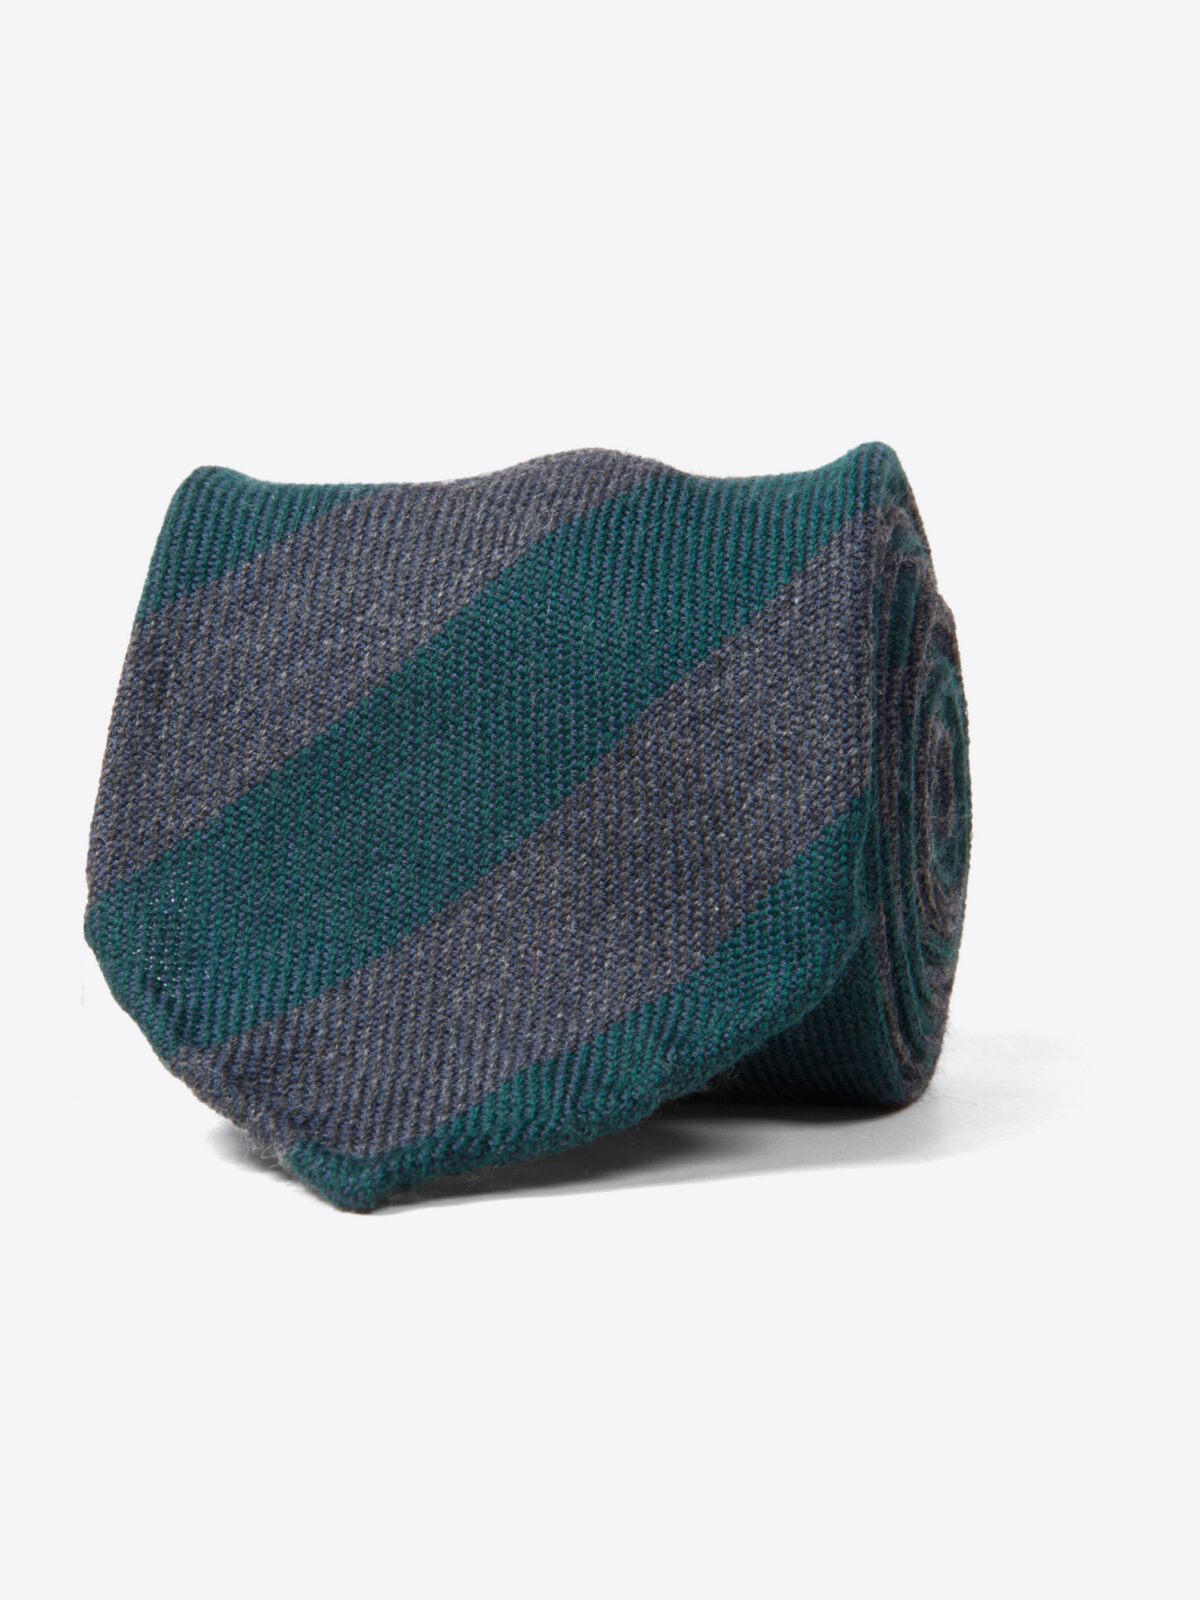 Sienna Pine and Grey Stripe Wool Tie